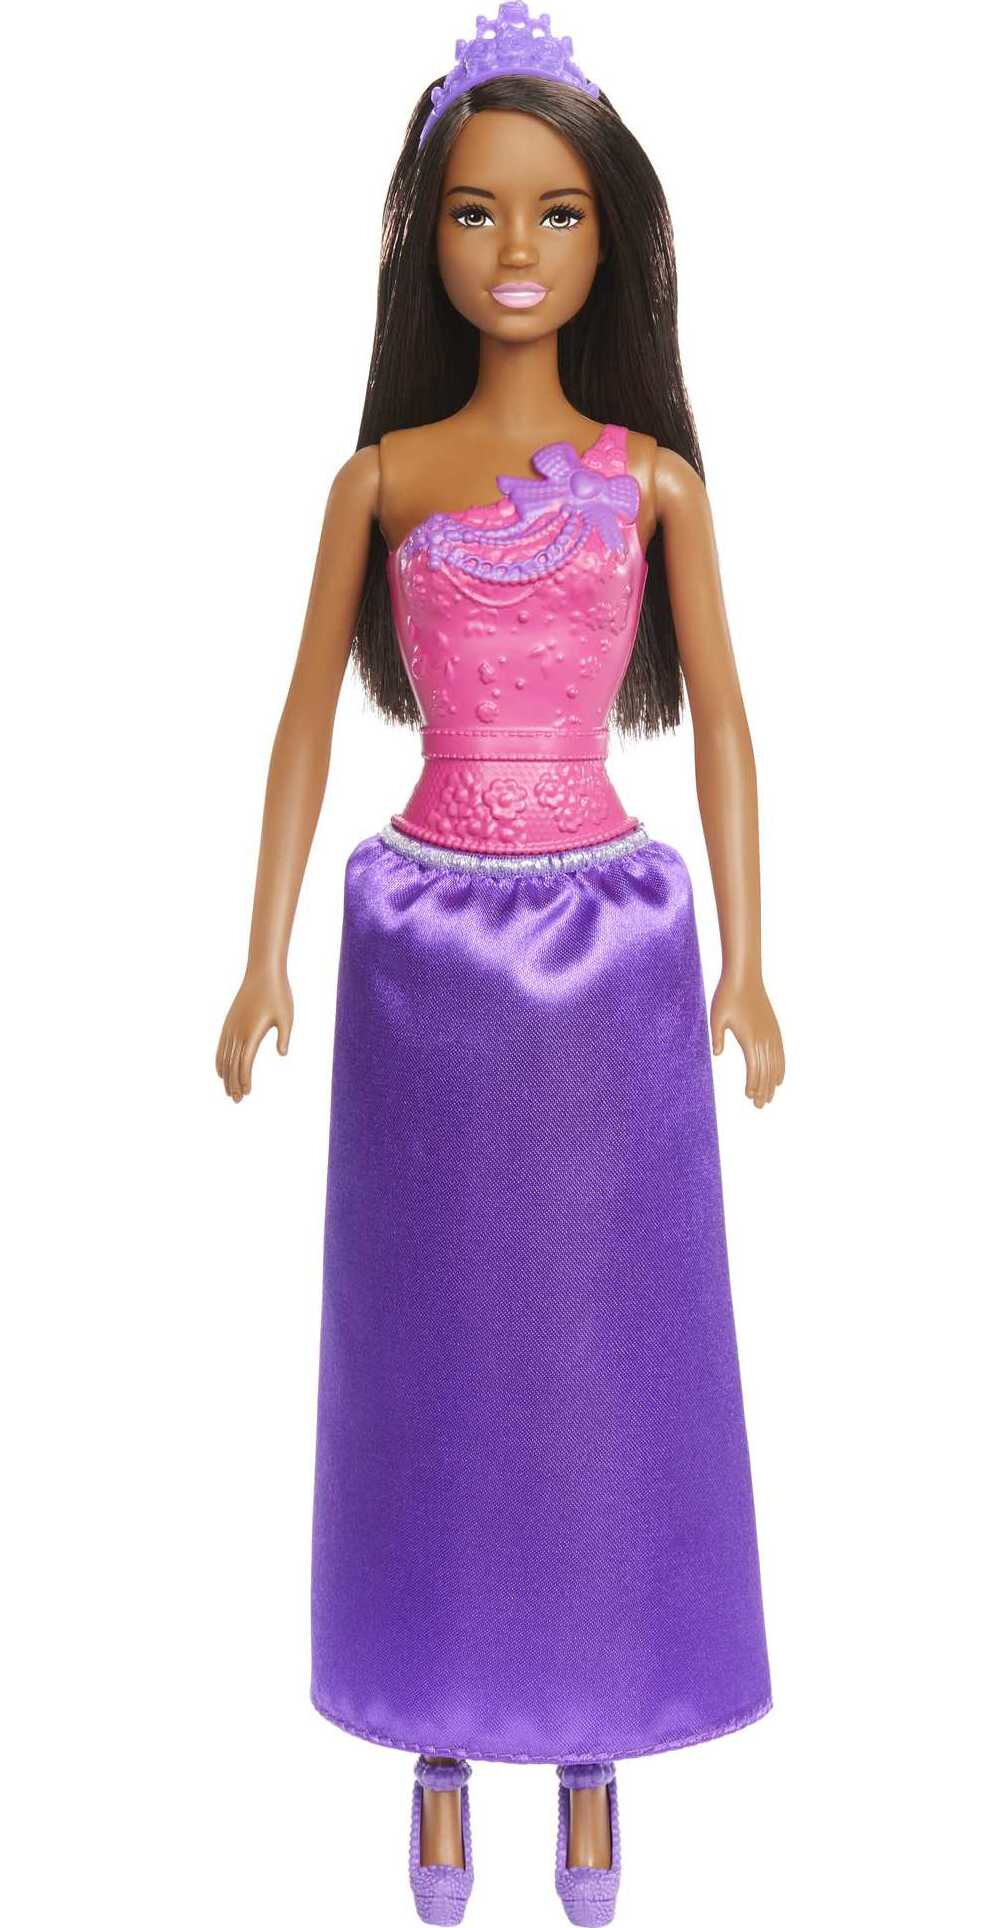 Barbie Dreamtopia Princess with Purple Accessories $3.70 at Walmart.com Free Ship w/ Walmart+ or $35+ purchase